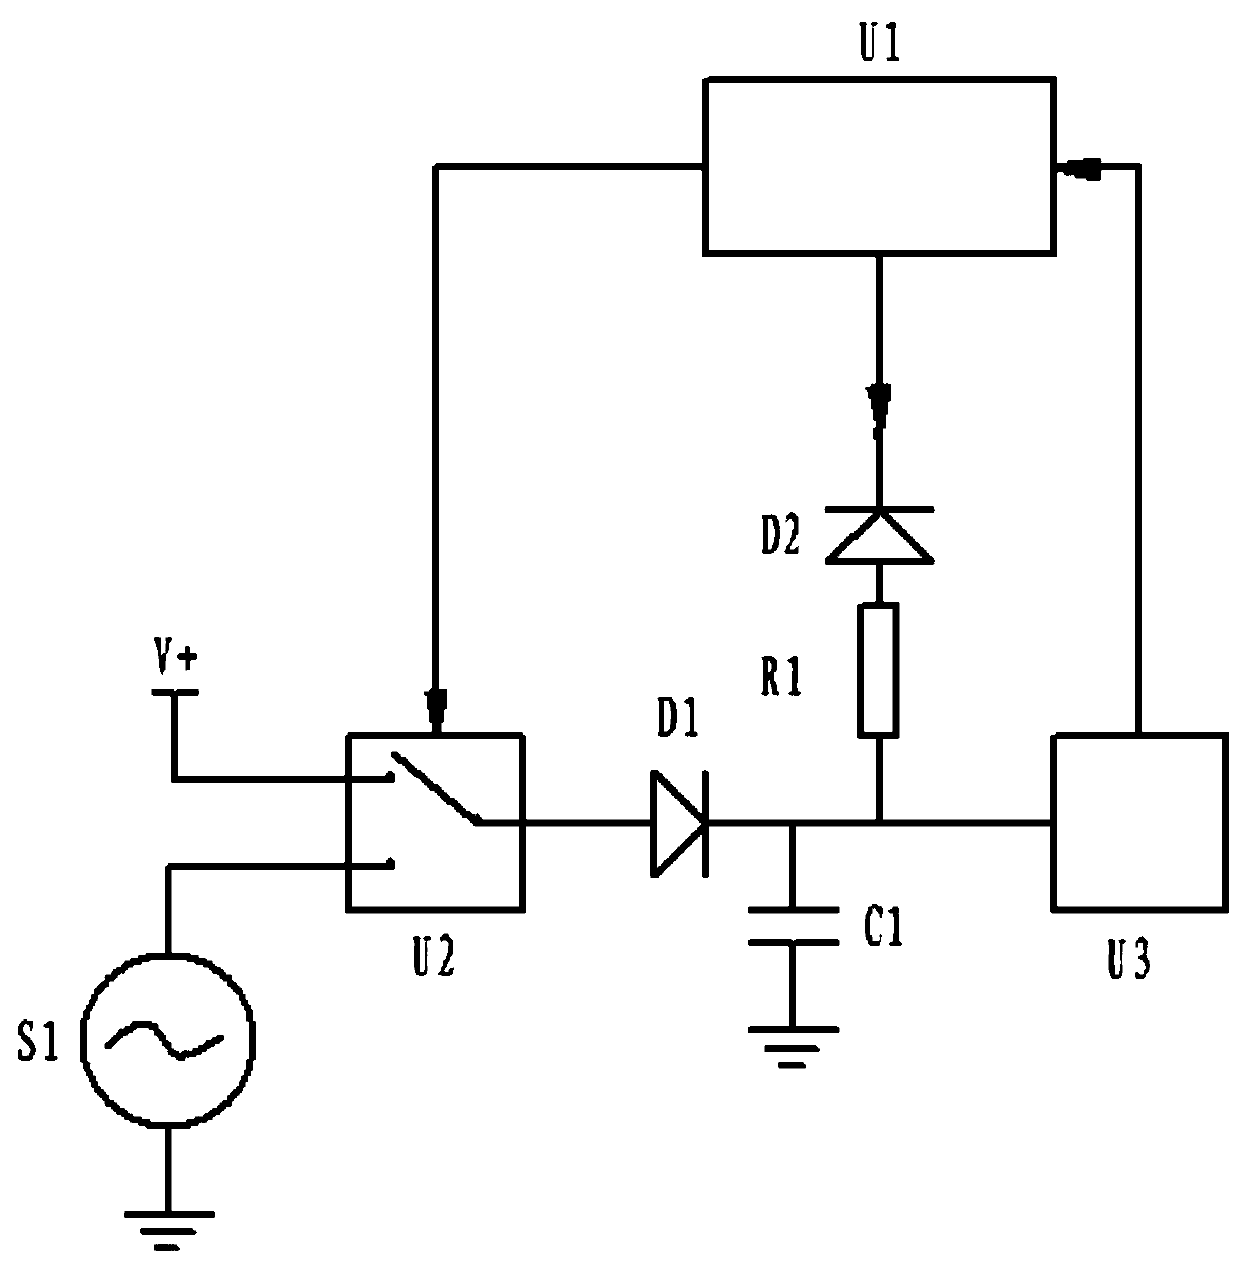 An ultrasonic flowmeter peak detection method and compensation system